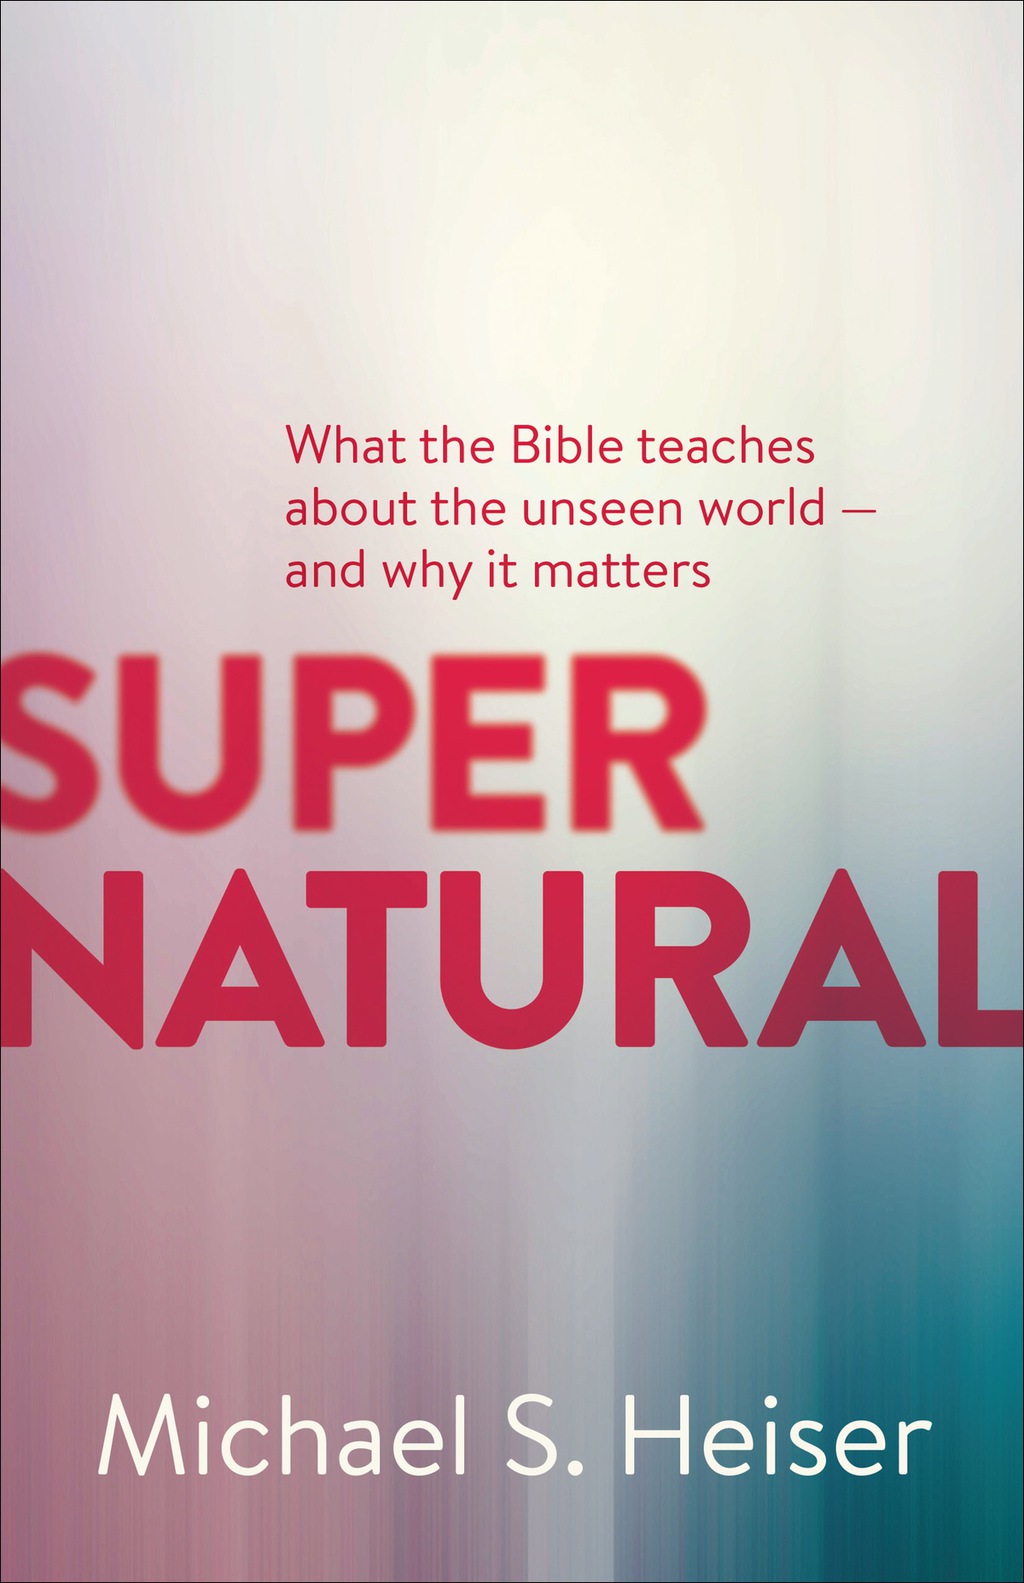 Supernatural (eBook) - Michael S. Heiser,